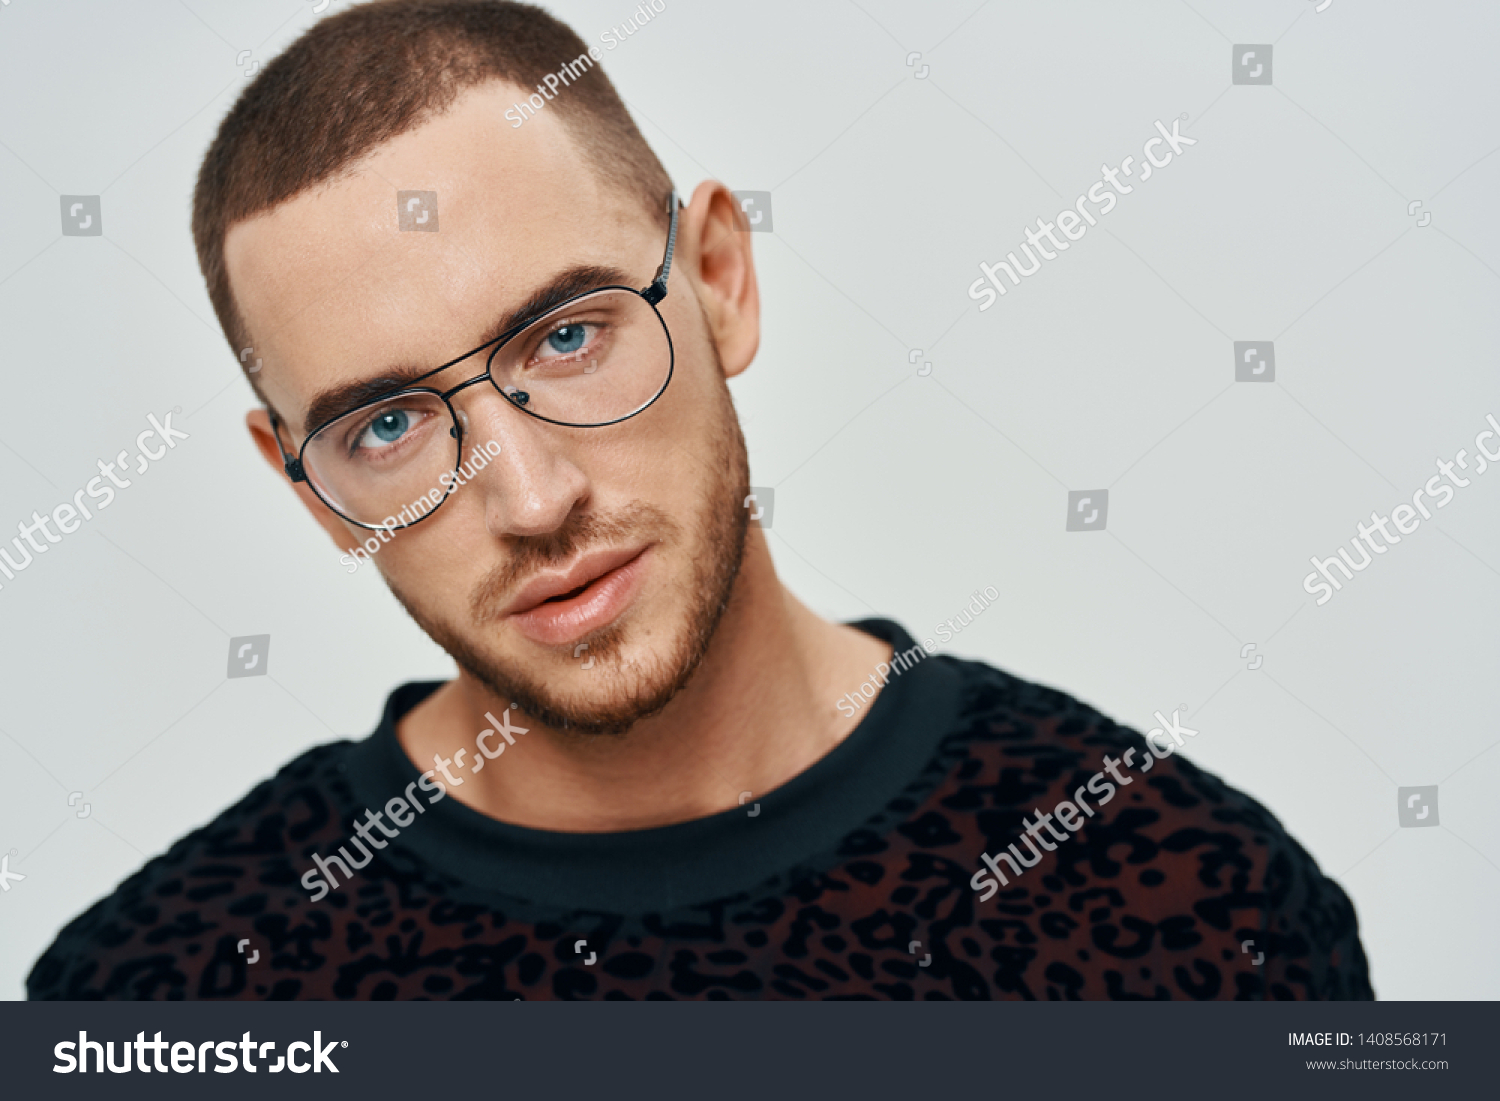 Cute Brutal Man Glasses Short Hair Stock Photo Edit Now 1408568171